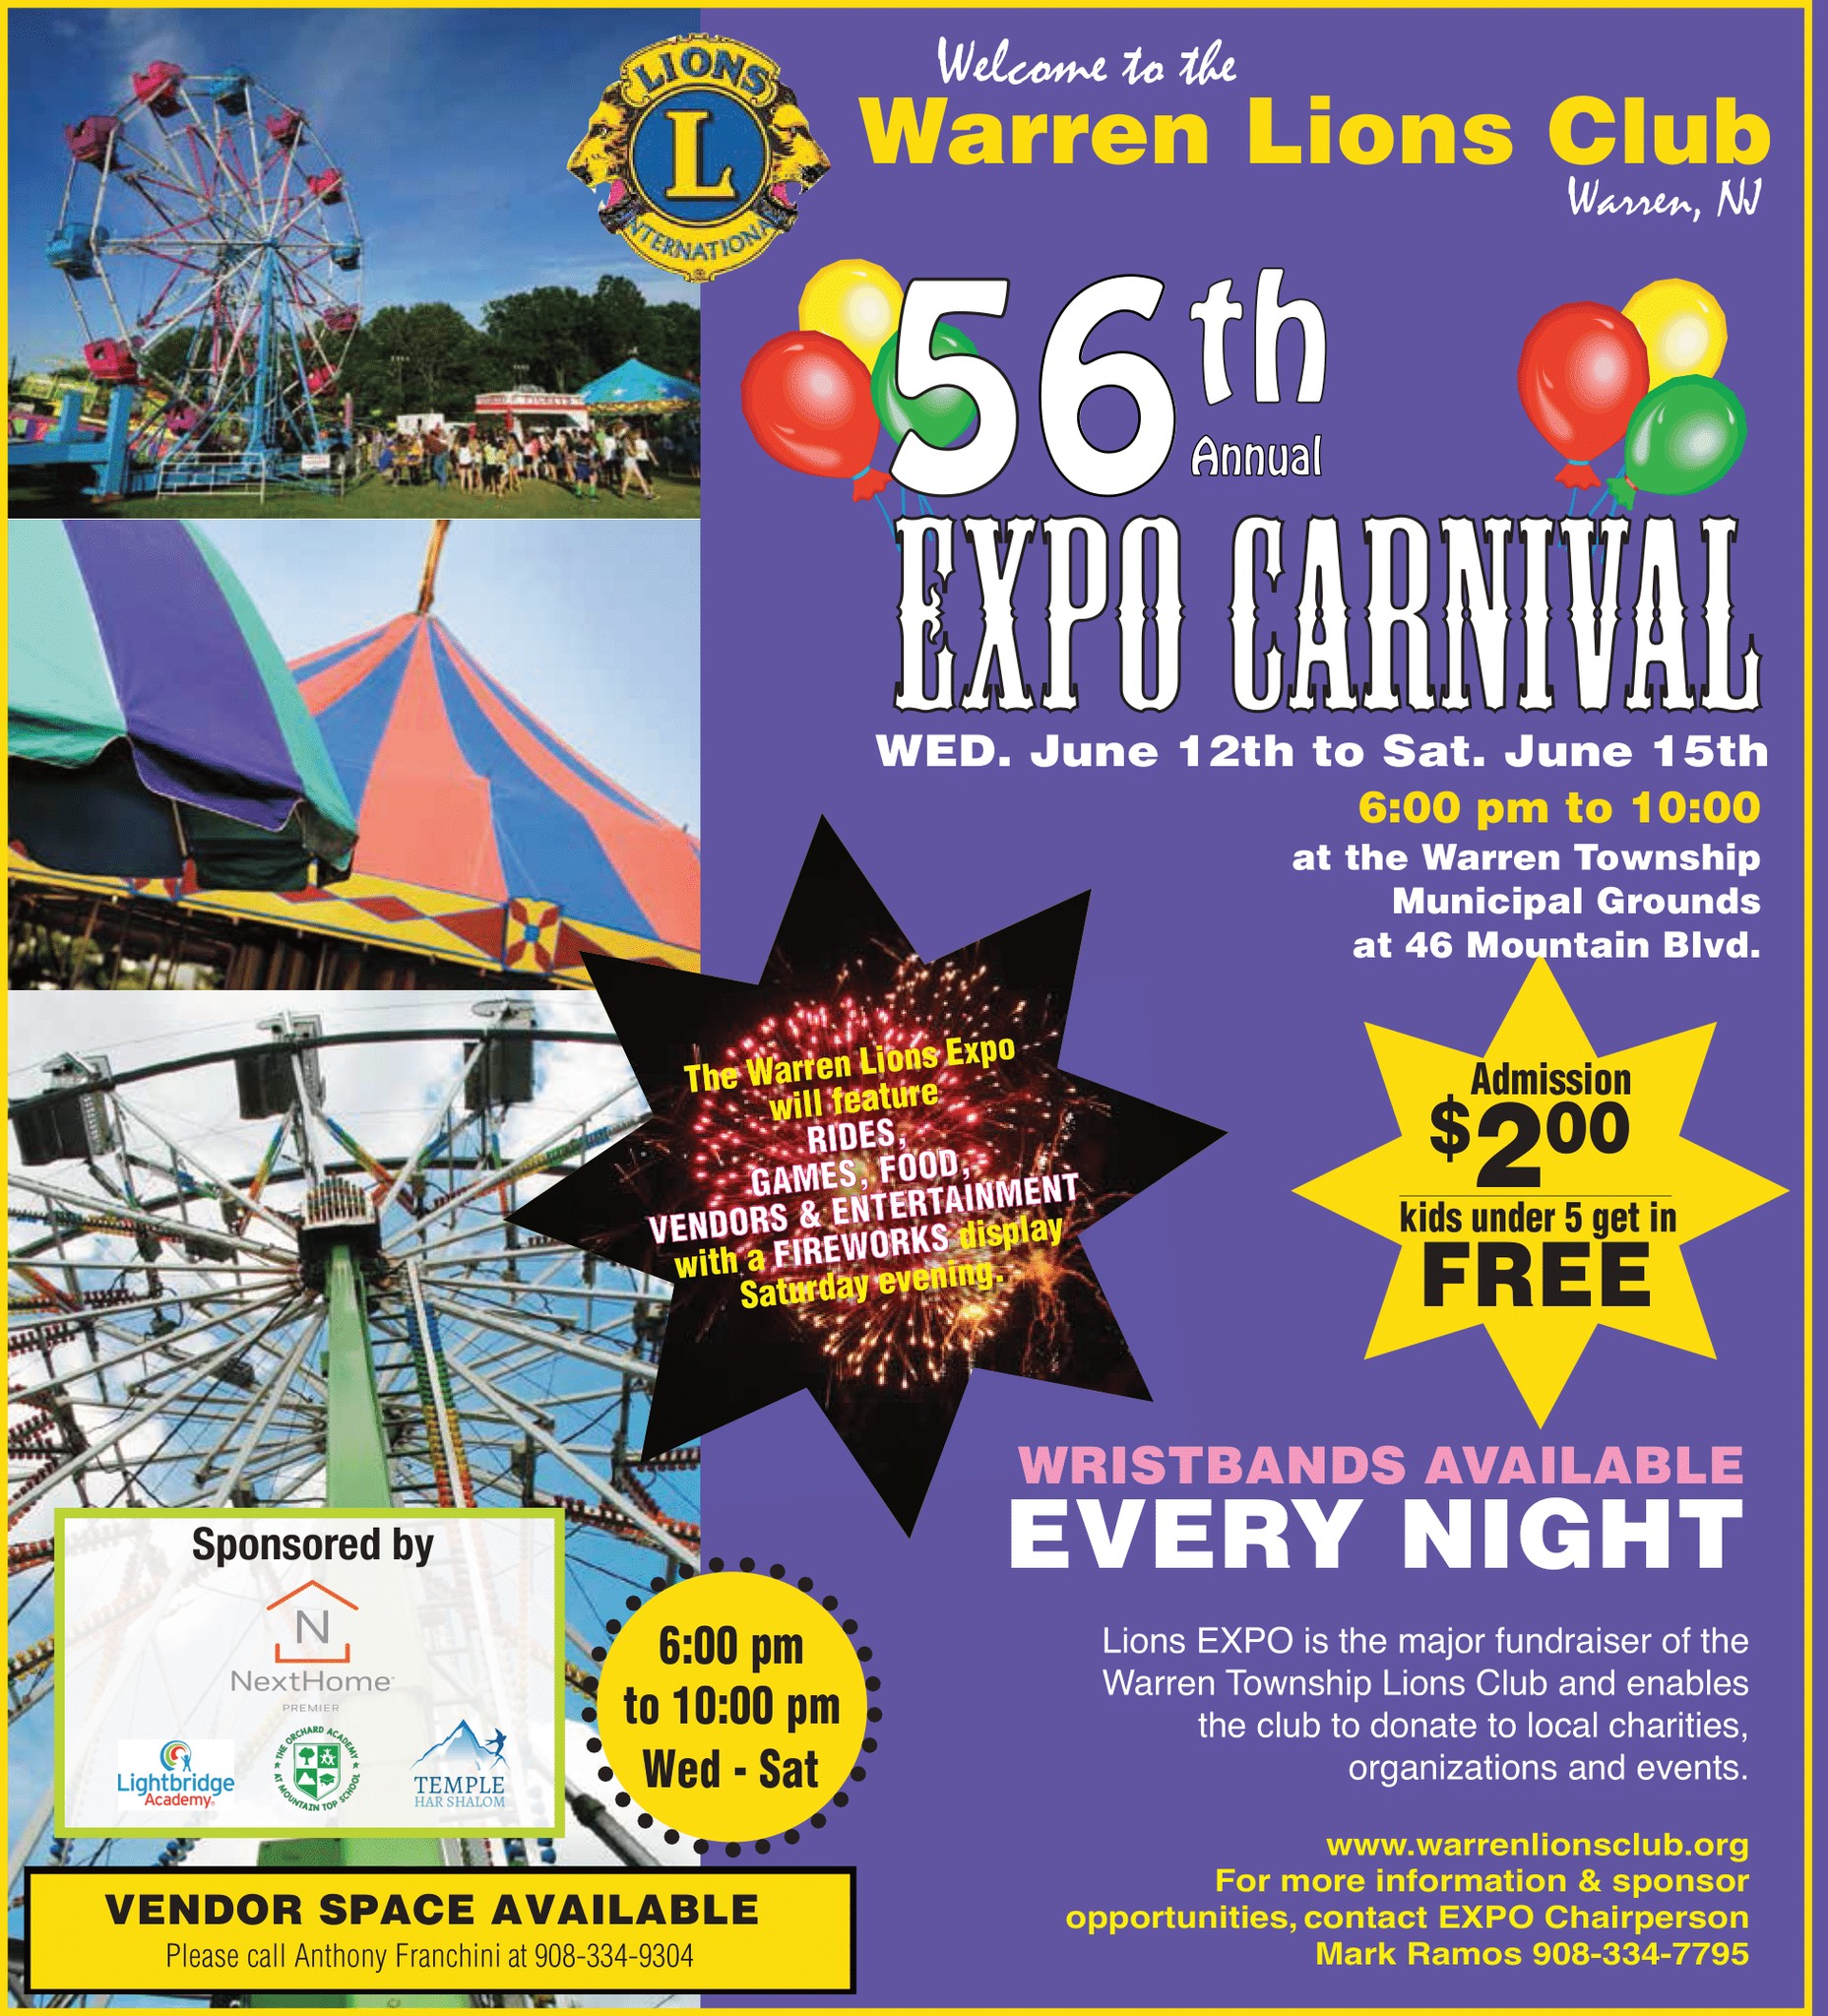 56th Annual Warren Lions Club Expo Carnival